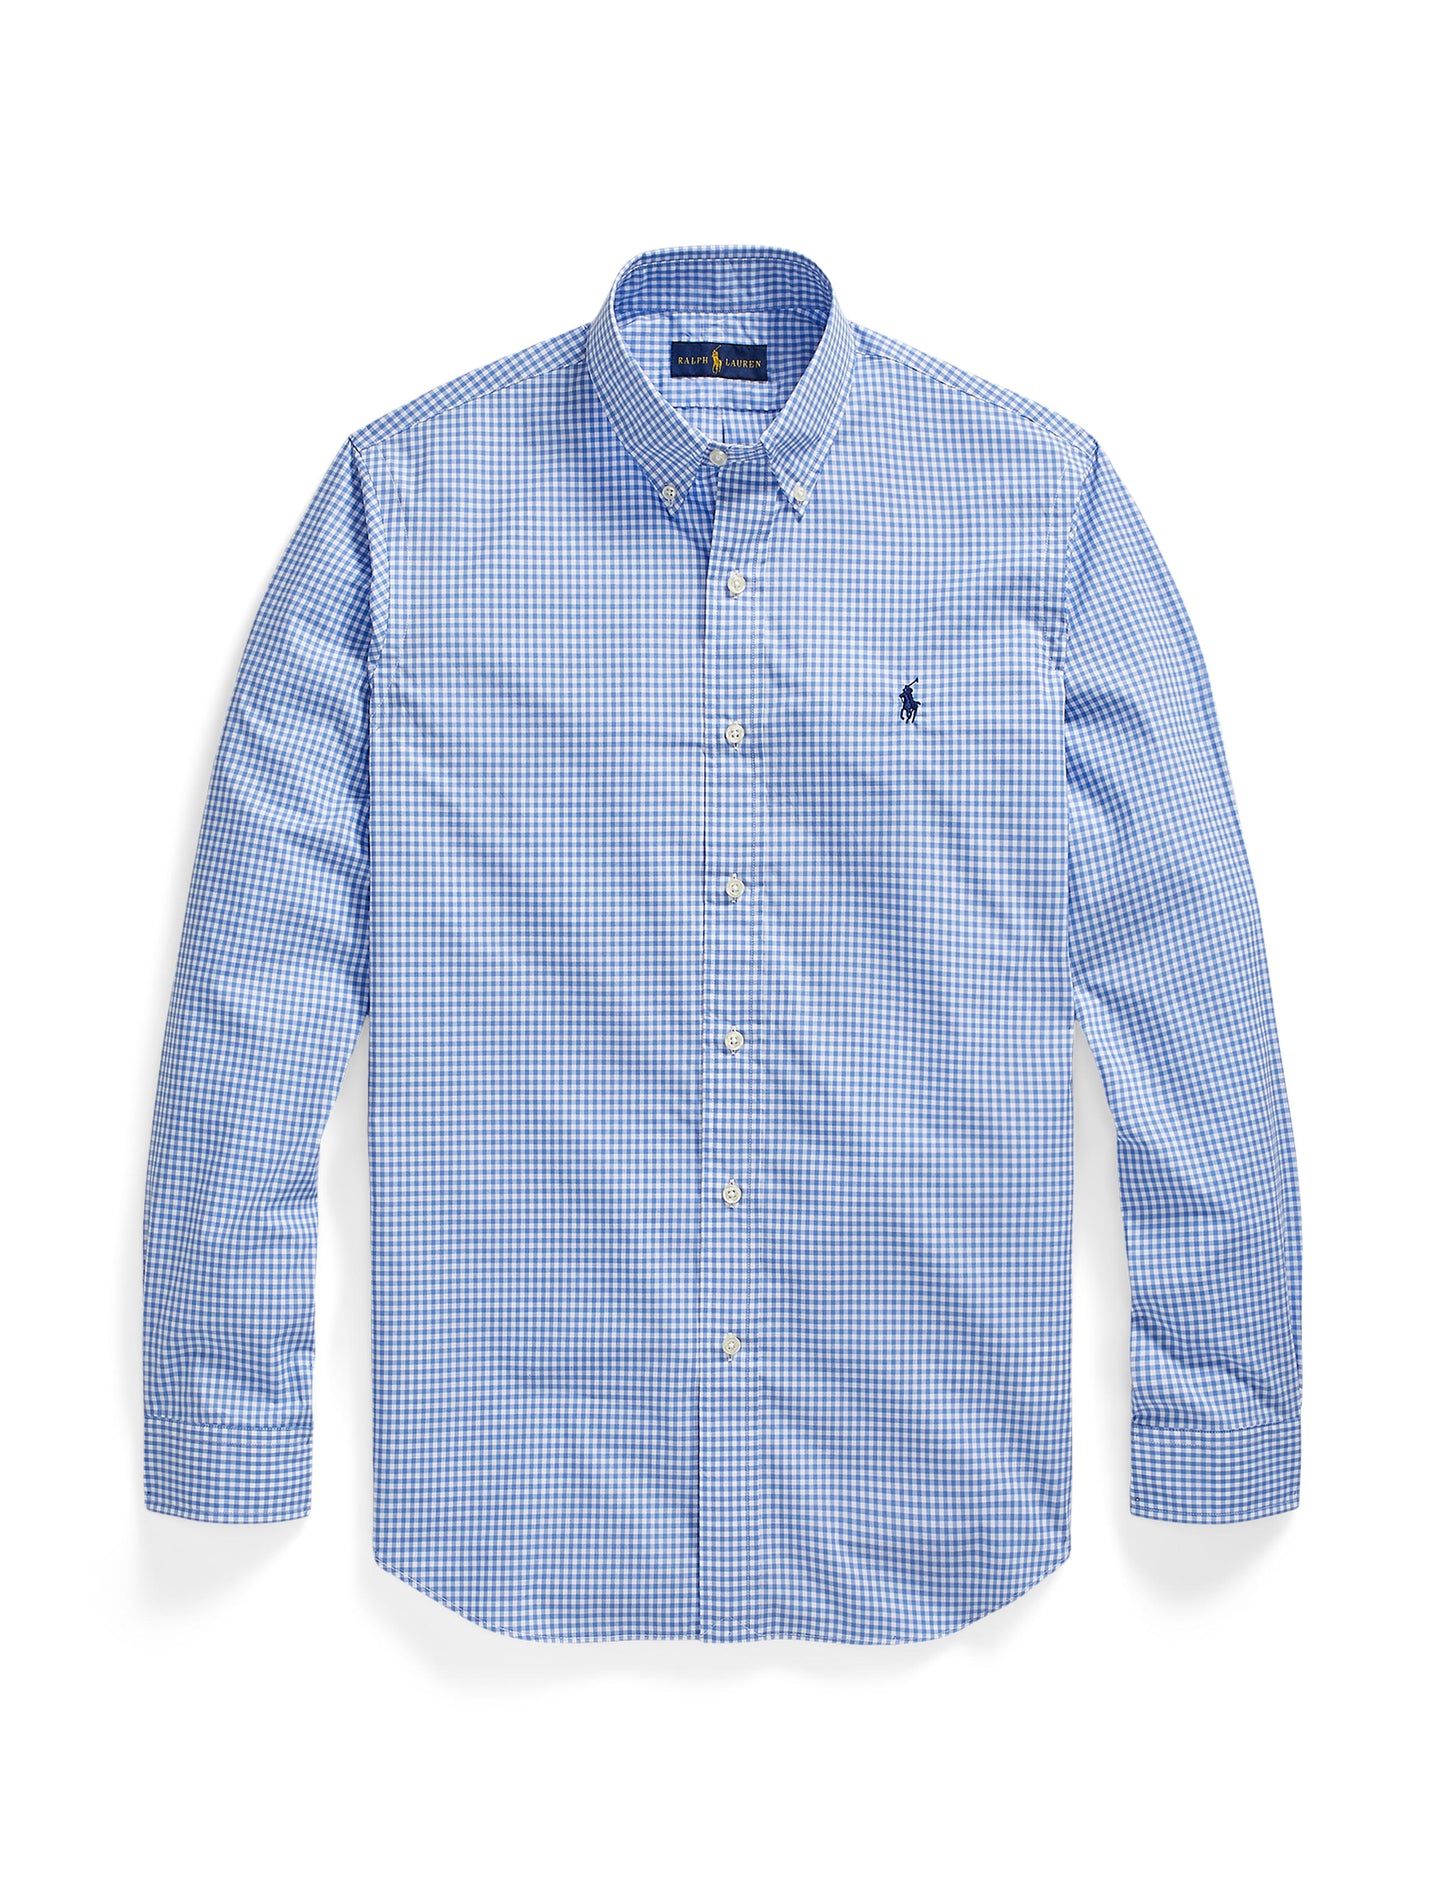 Polo Ralph Lauren Custom Fit Checked Shirt Blue/White